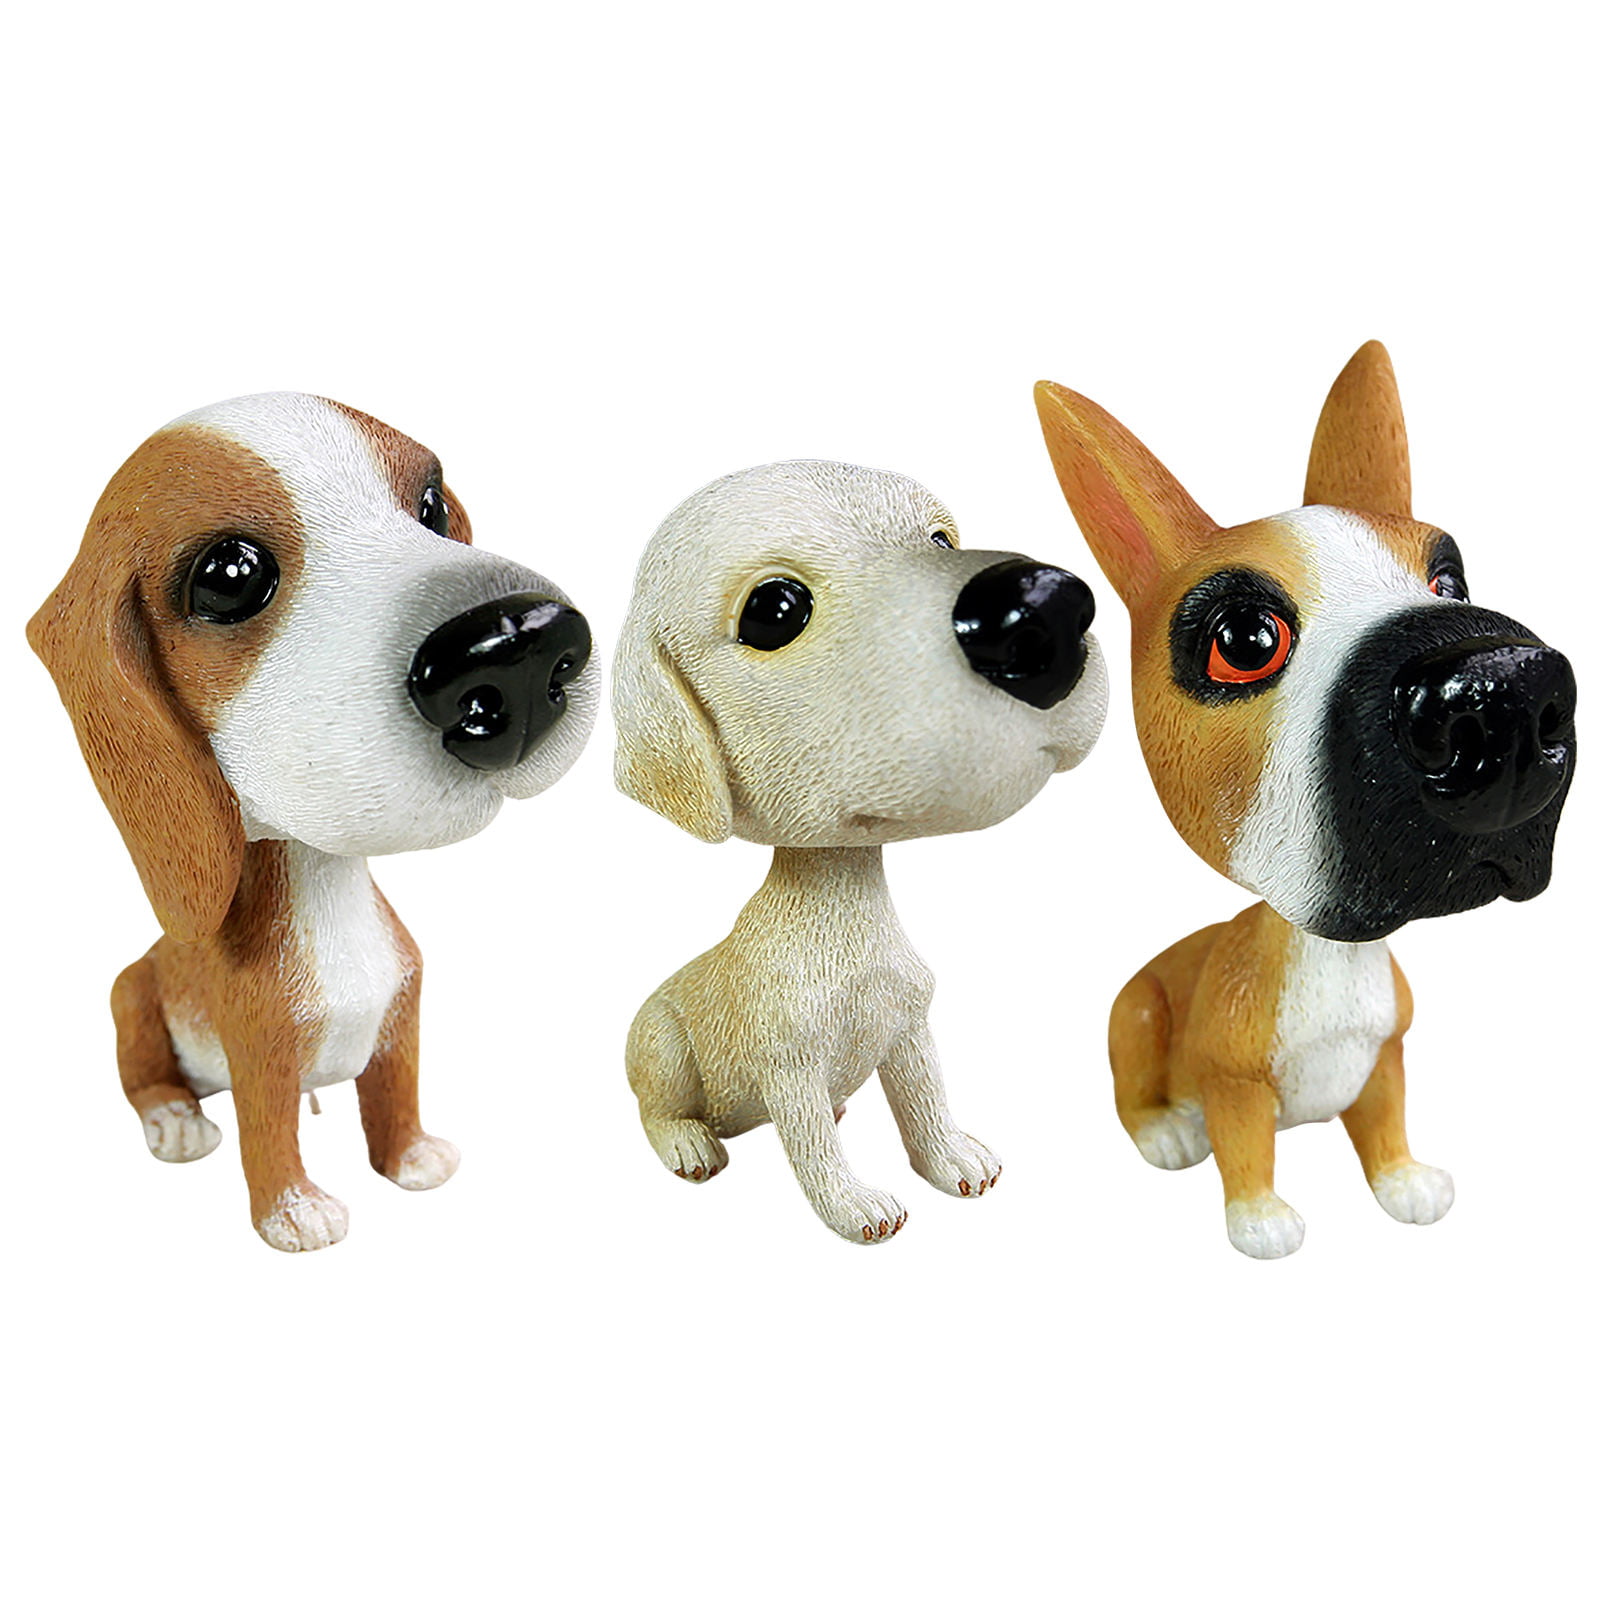 Cute Resin Bobble-Head Dashboard Dogs Model Figure Toys Home Office Decor 